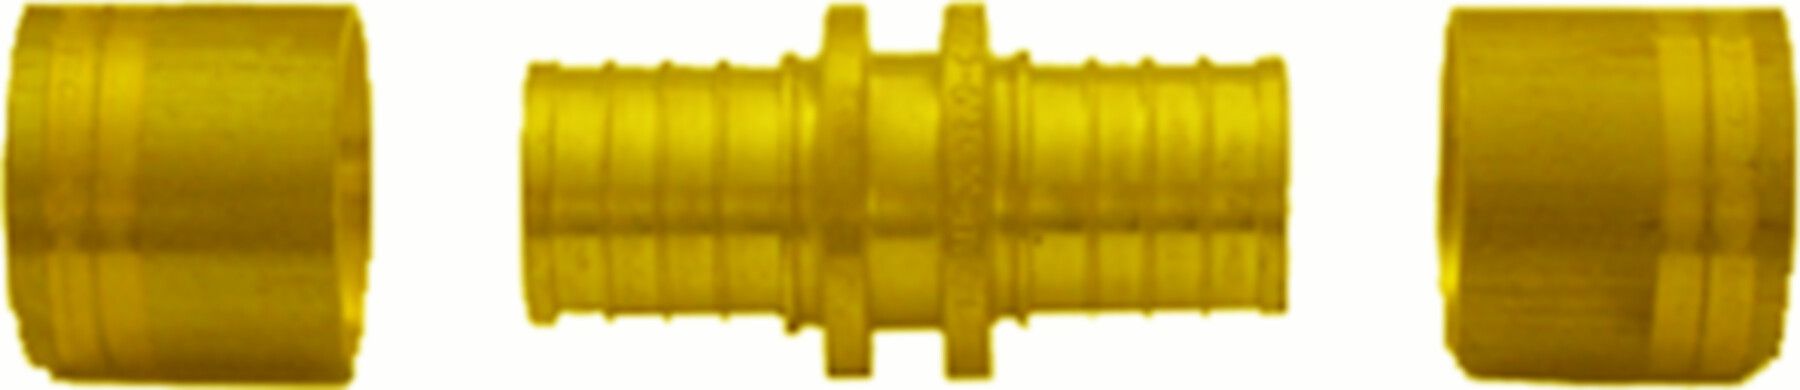 Press-Verbindungskupplung PVK H - 25 ø 25/2.3 mm - Isopex Fernwärmeleitung